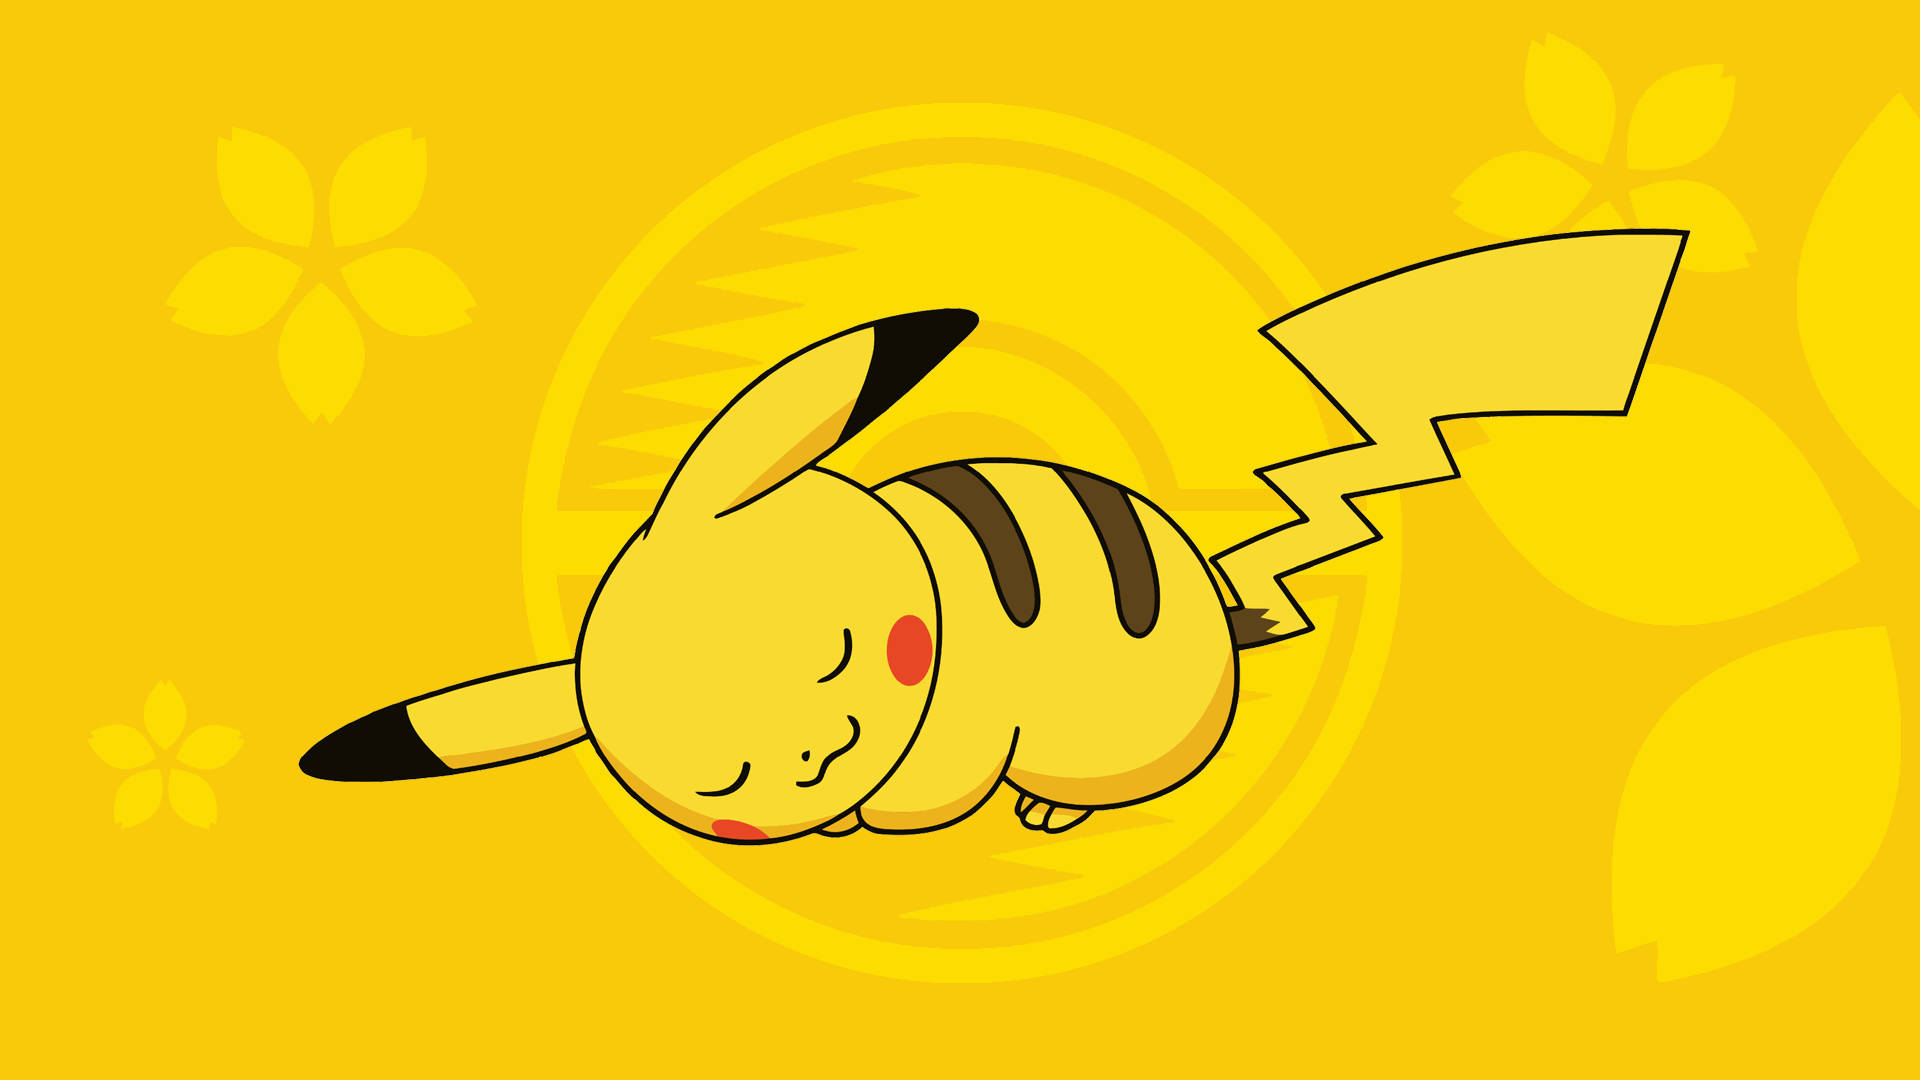 Pikachu 3d Peaceful Electric Type Pokémon Wallpaper